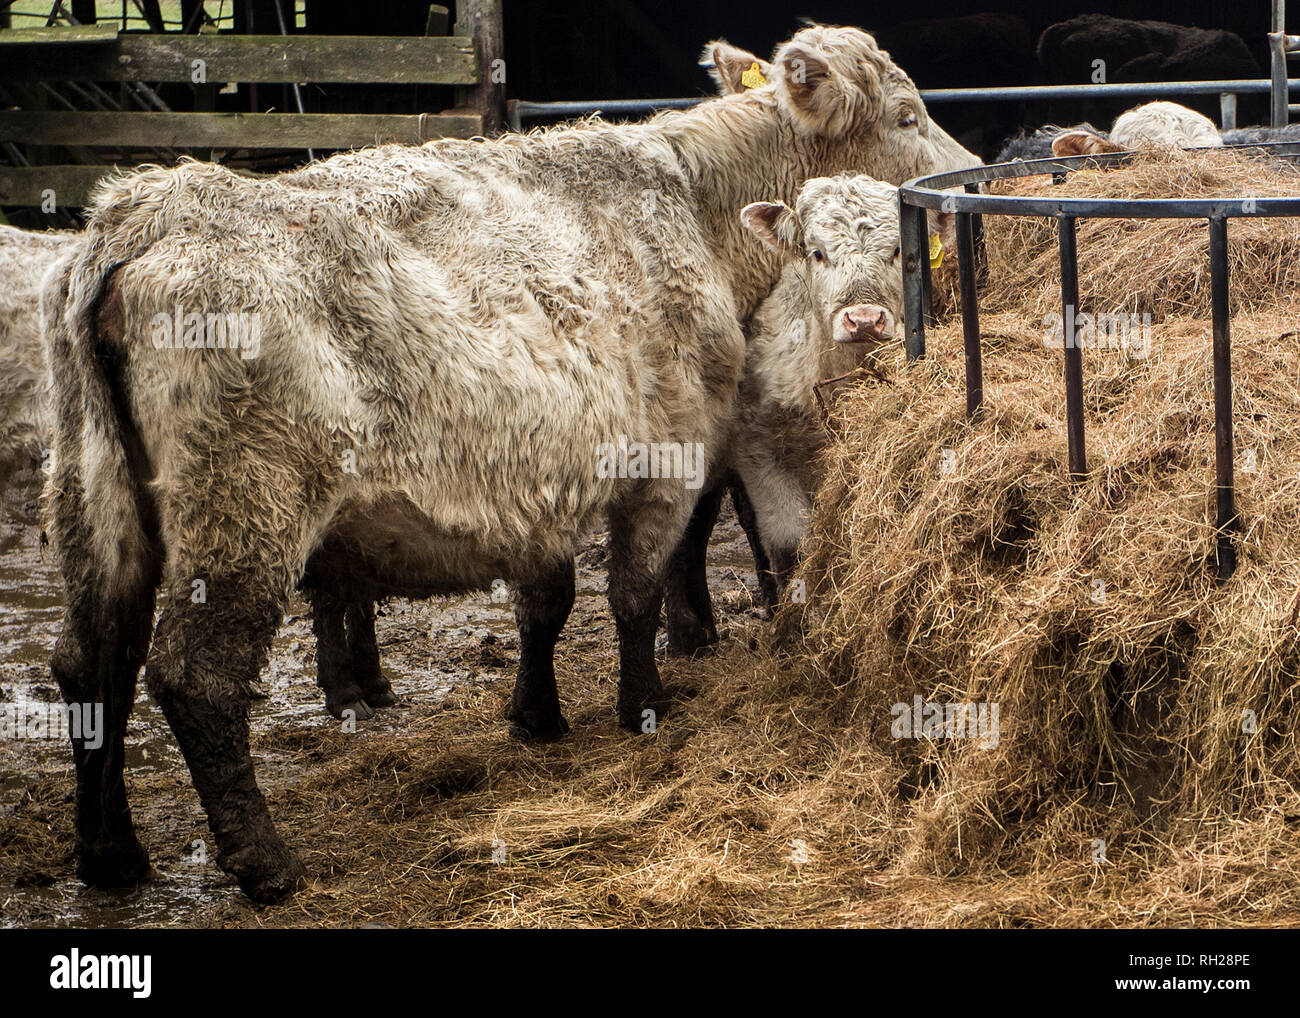 Junge Kühe, Fütterung in Hof, in Richtung Kamera schaut, in Hof, Stockfoto